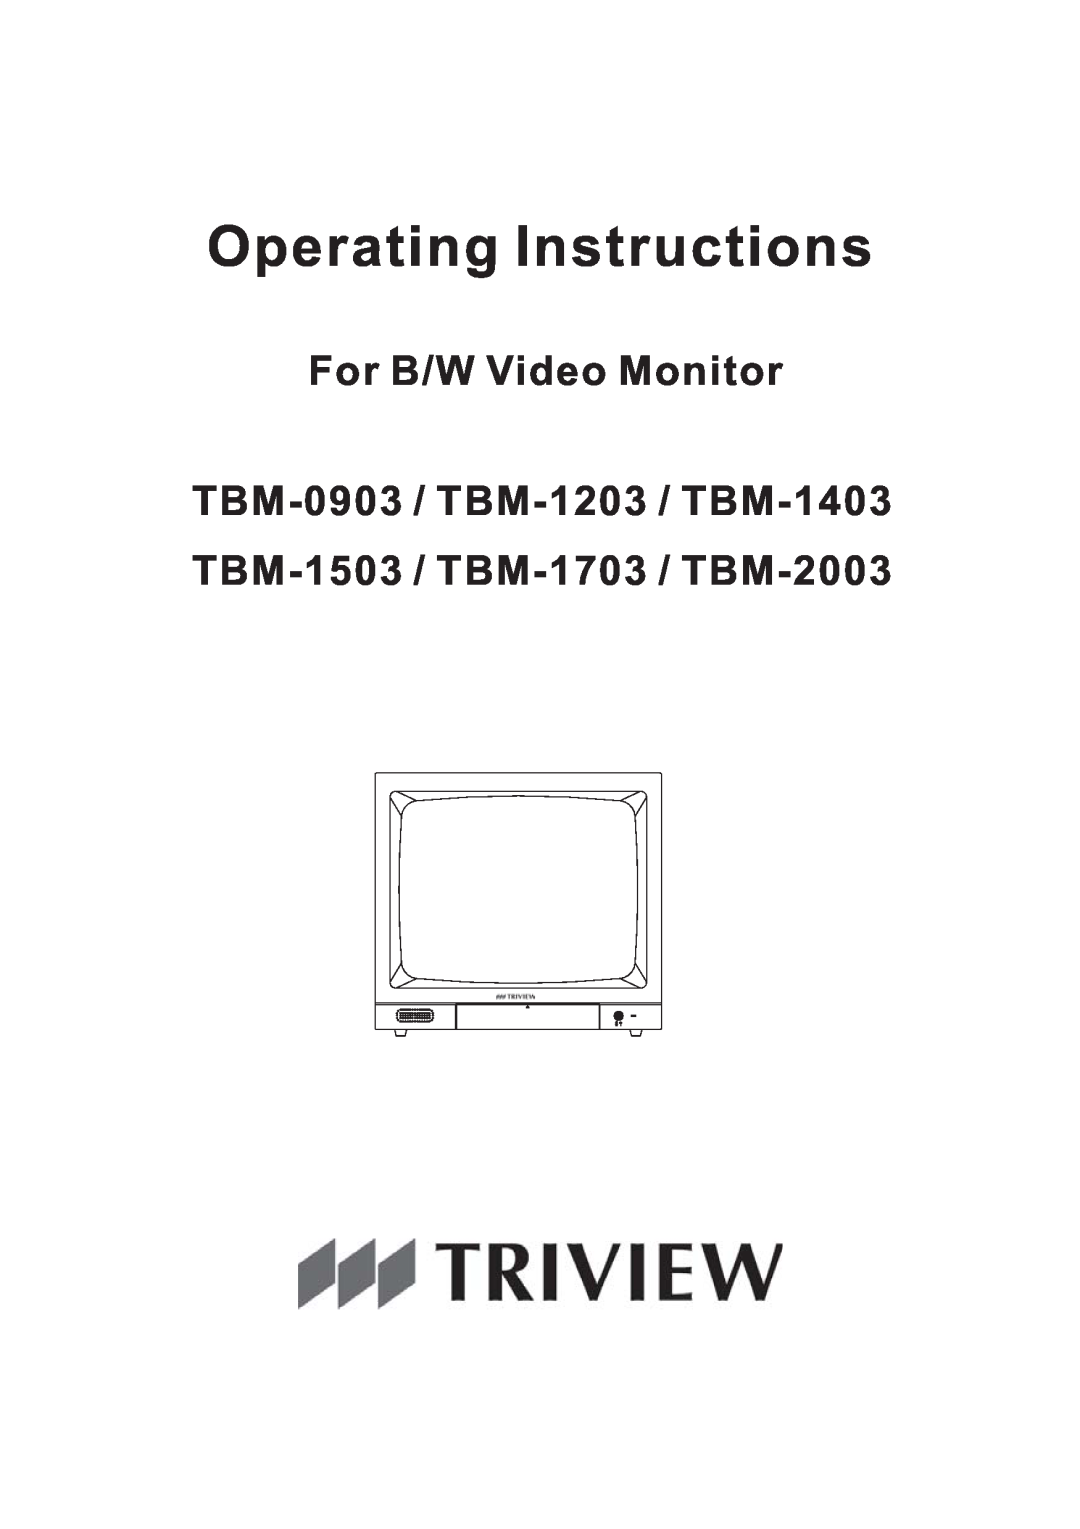 Tatung TBM-2003, TBM-1403, TBM-1503, TBM-0903, TBM-1203, TBM-1703 manual Operating Instructions, For B/W Video Monitor 